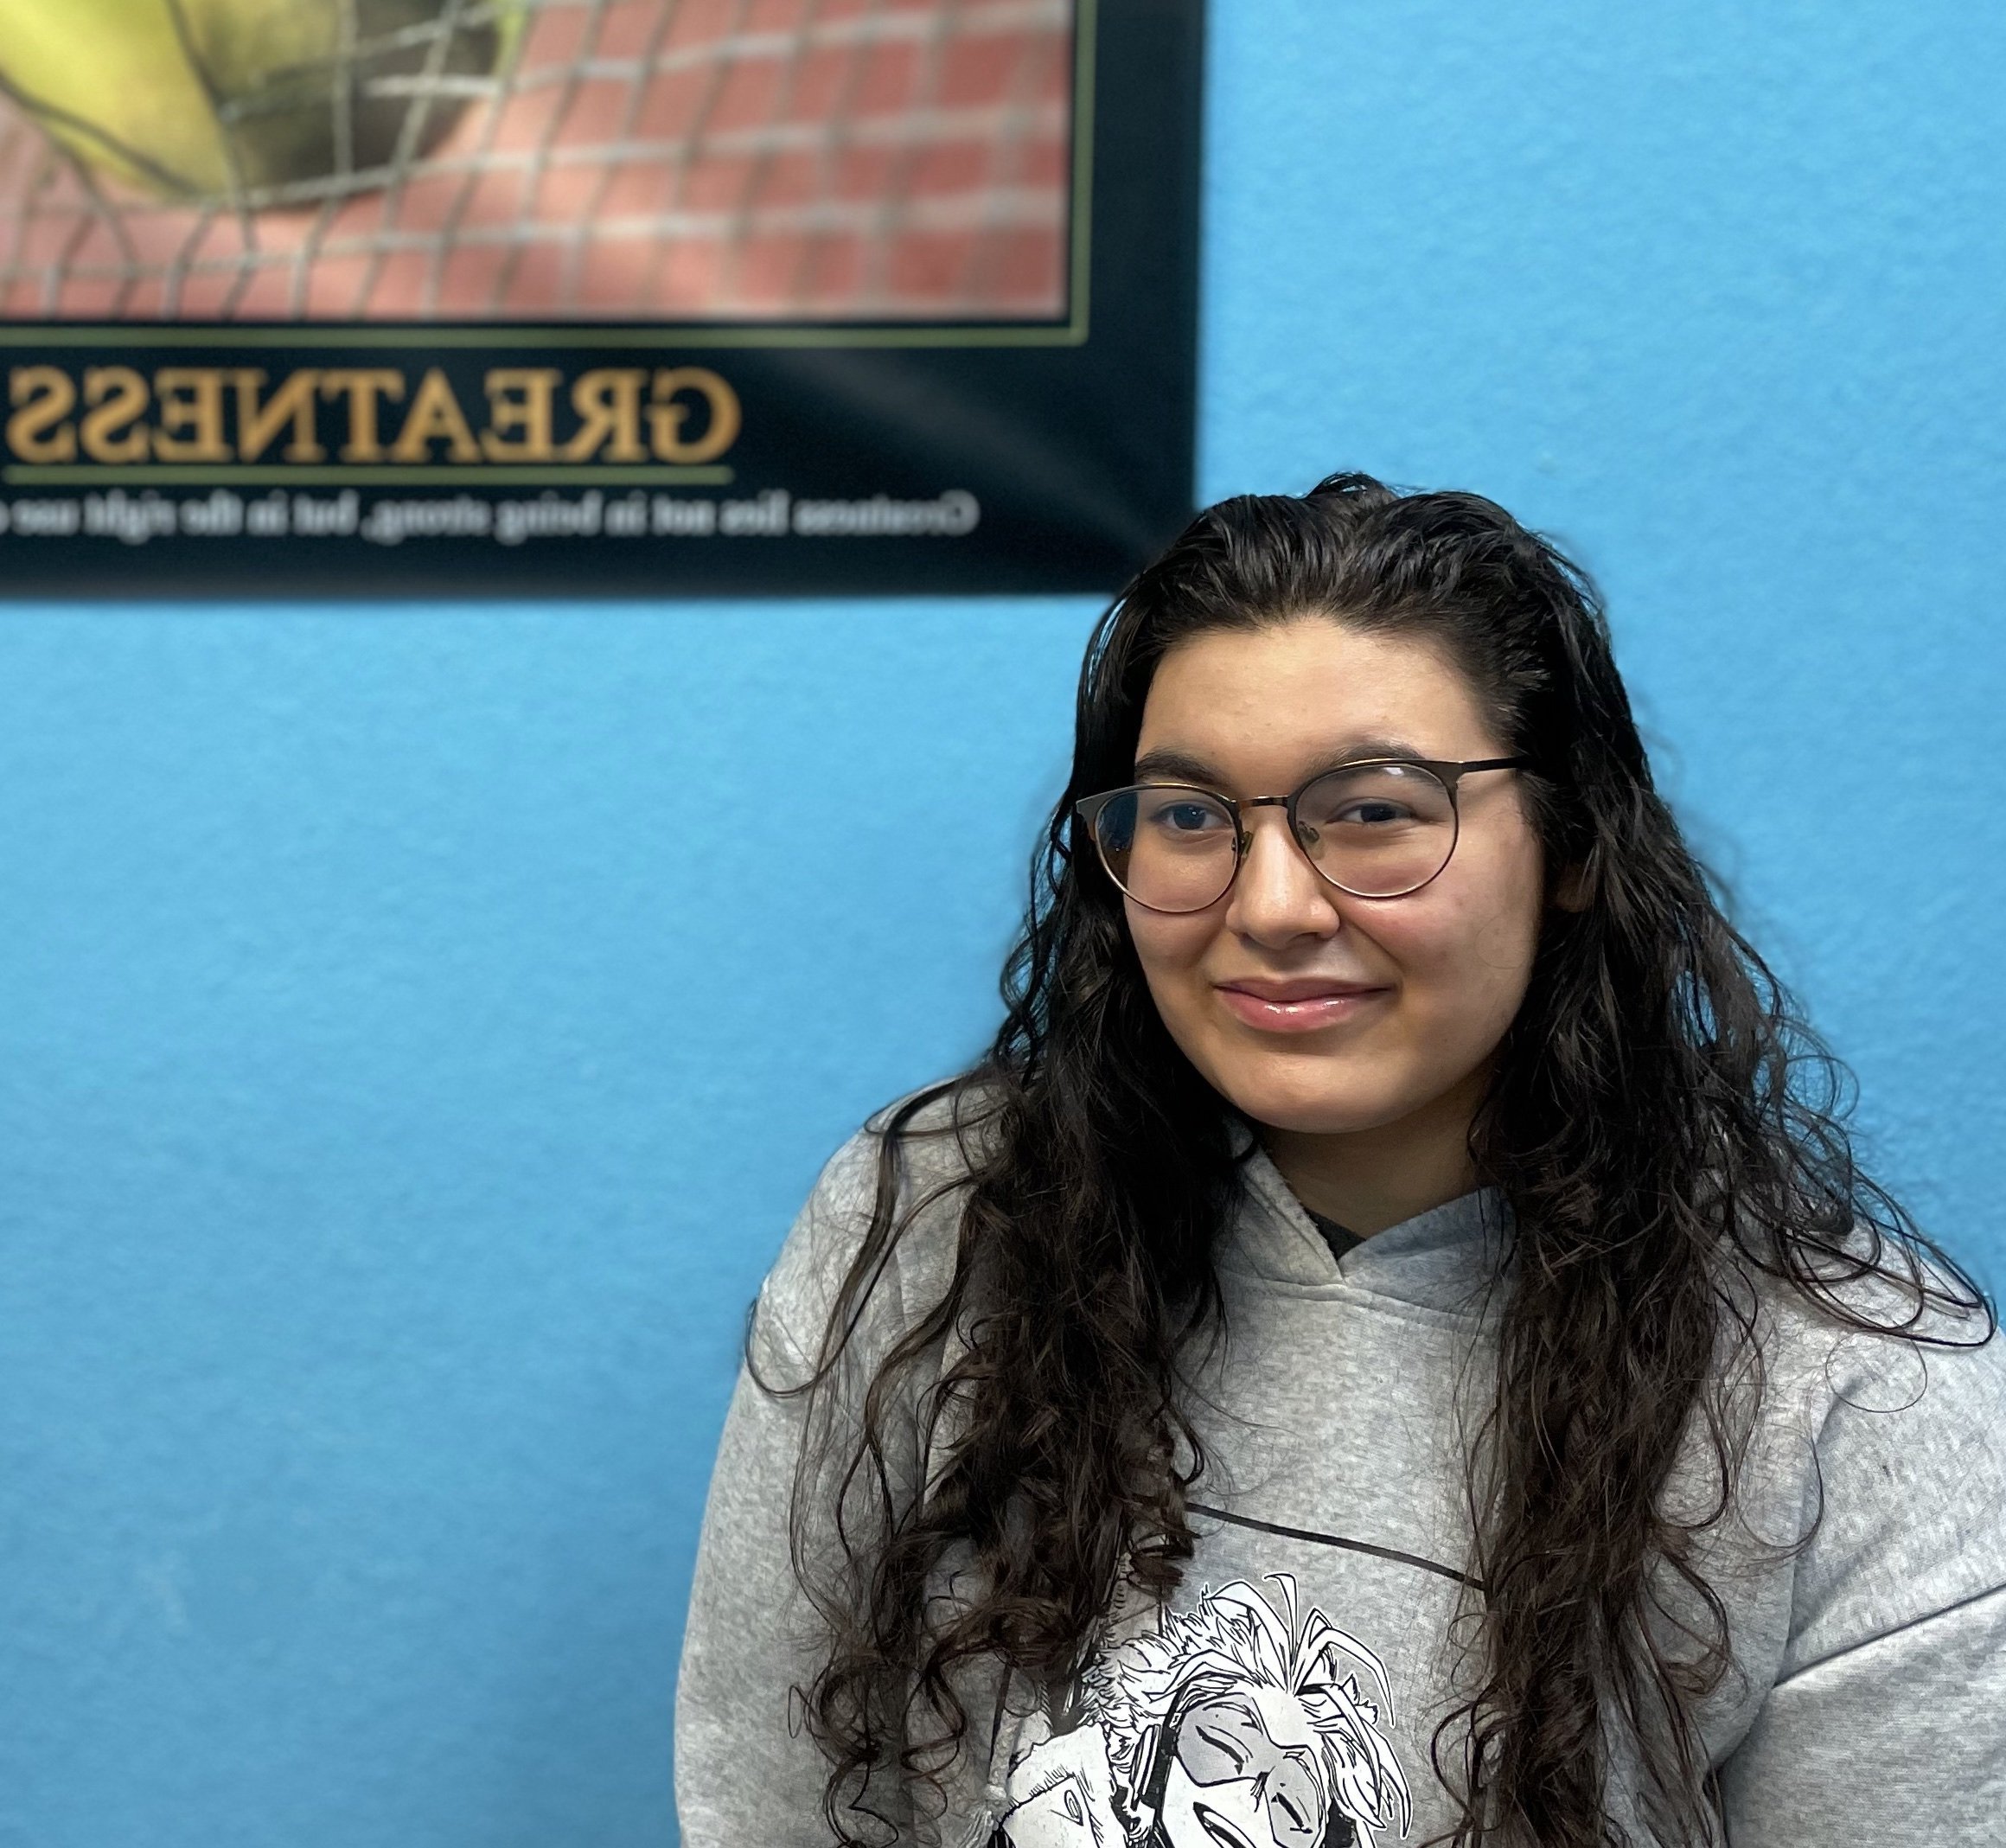 Marrah-Murray Rodriguez, Student at Miami-Dade Acceleration Academies